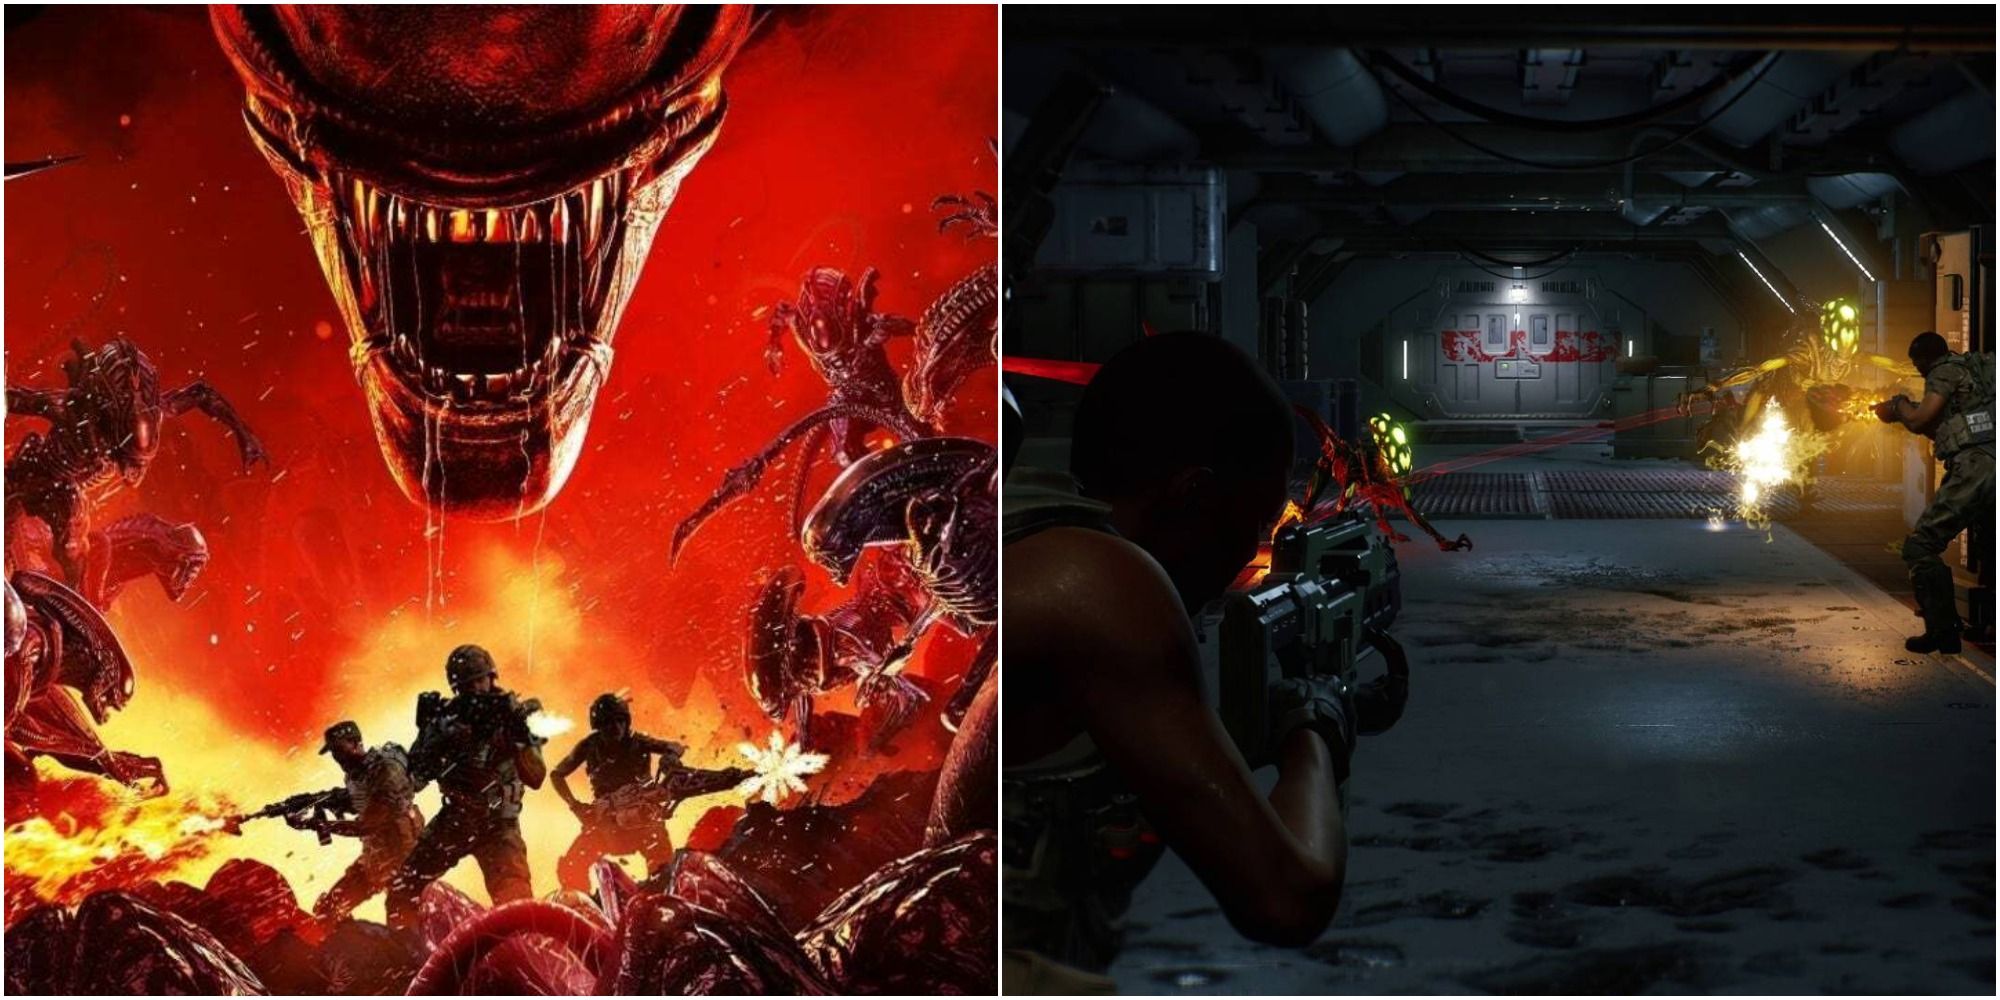 alien fireteam elite, promotional image and in game screenshot